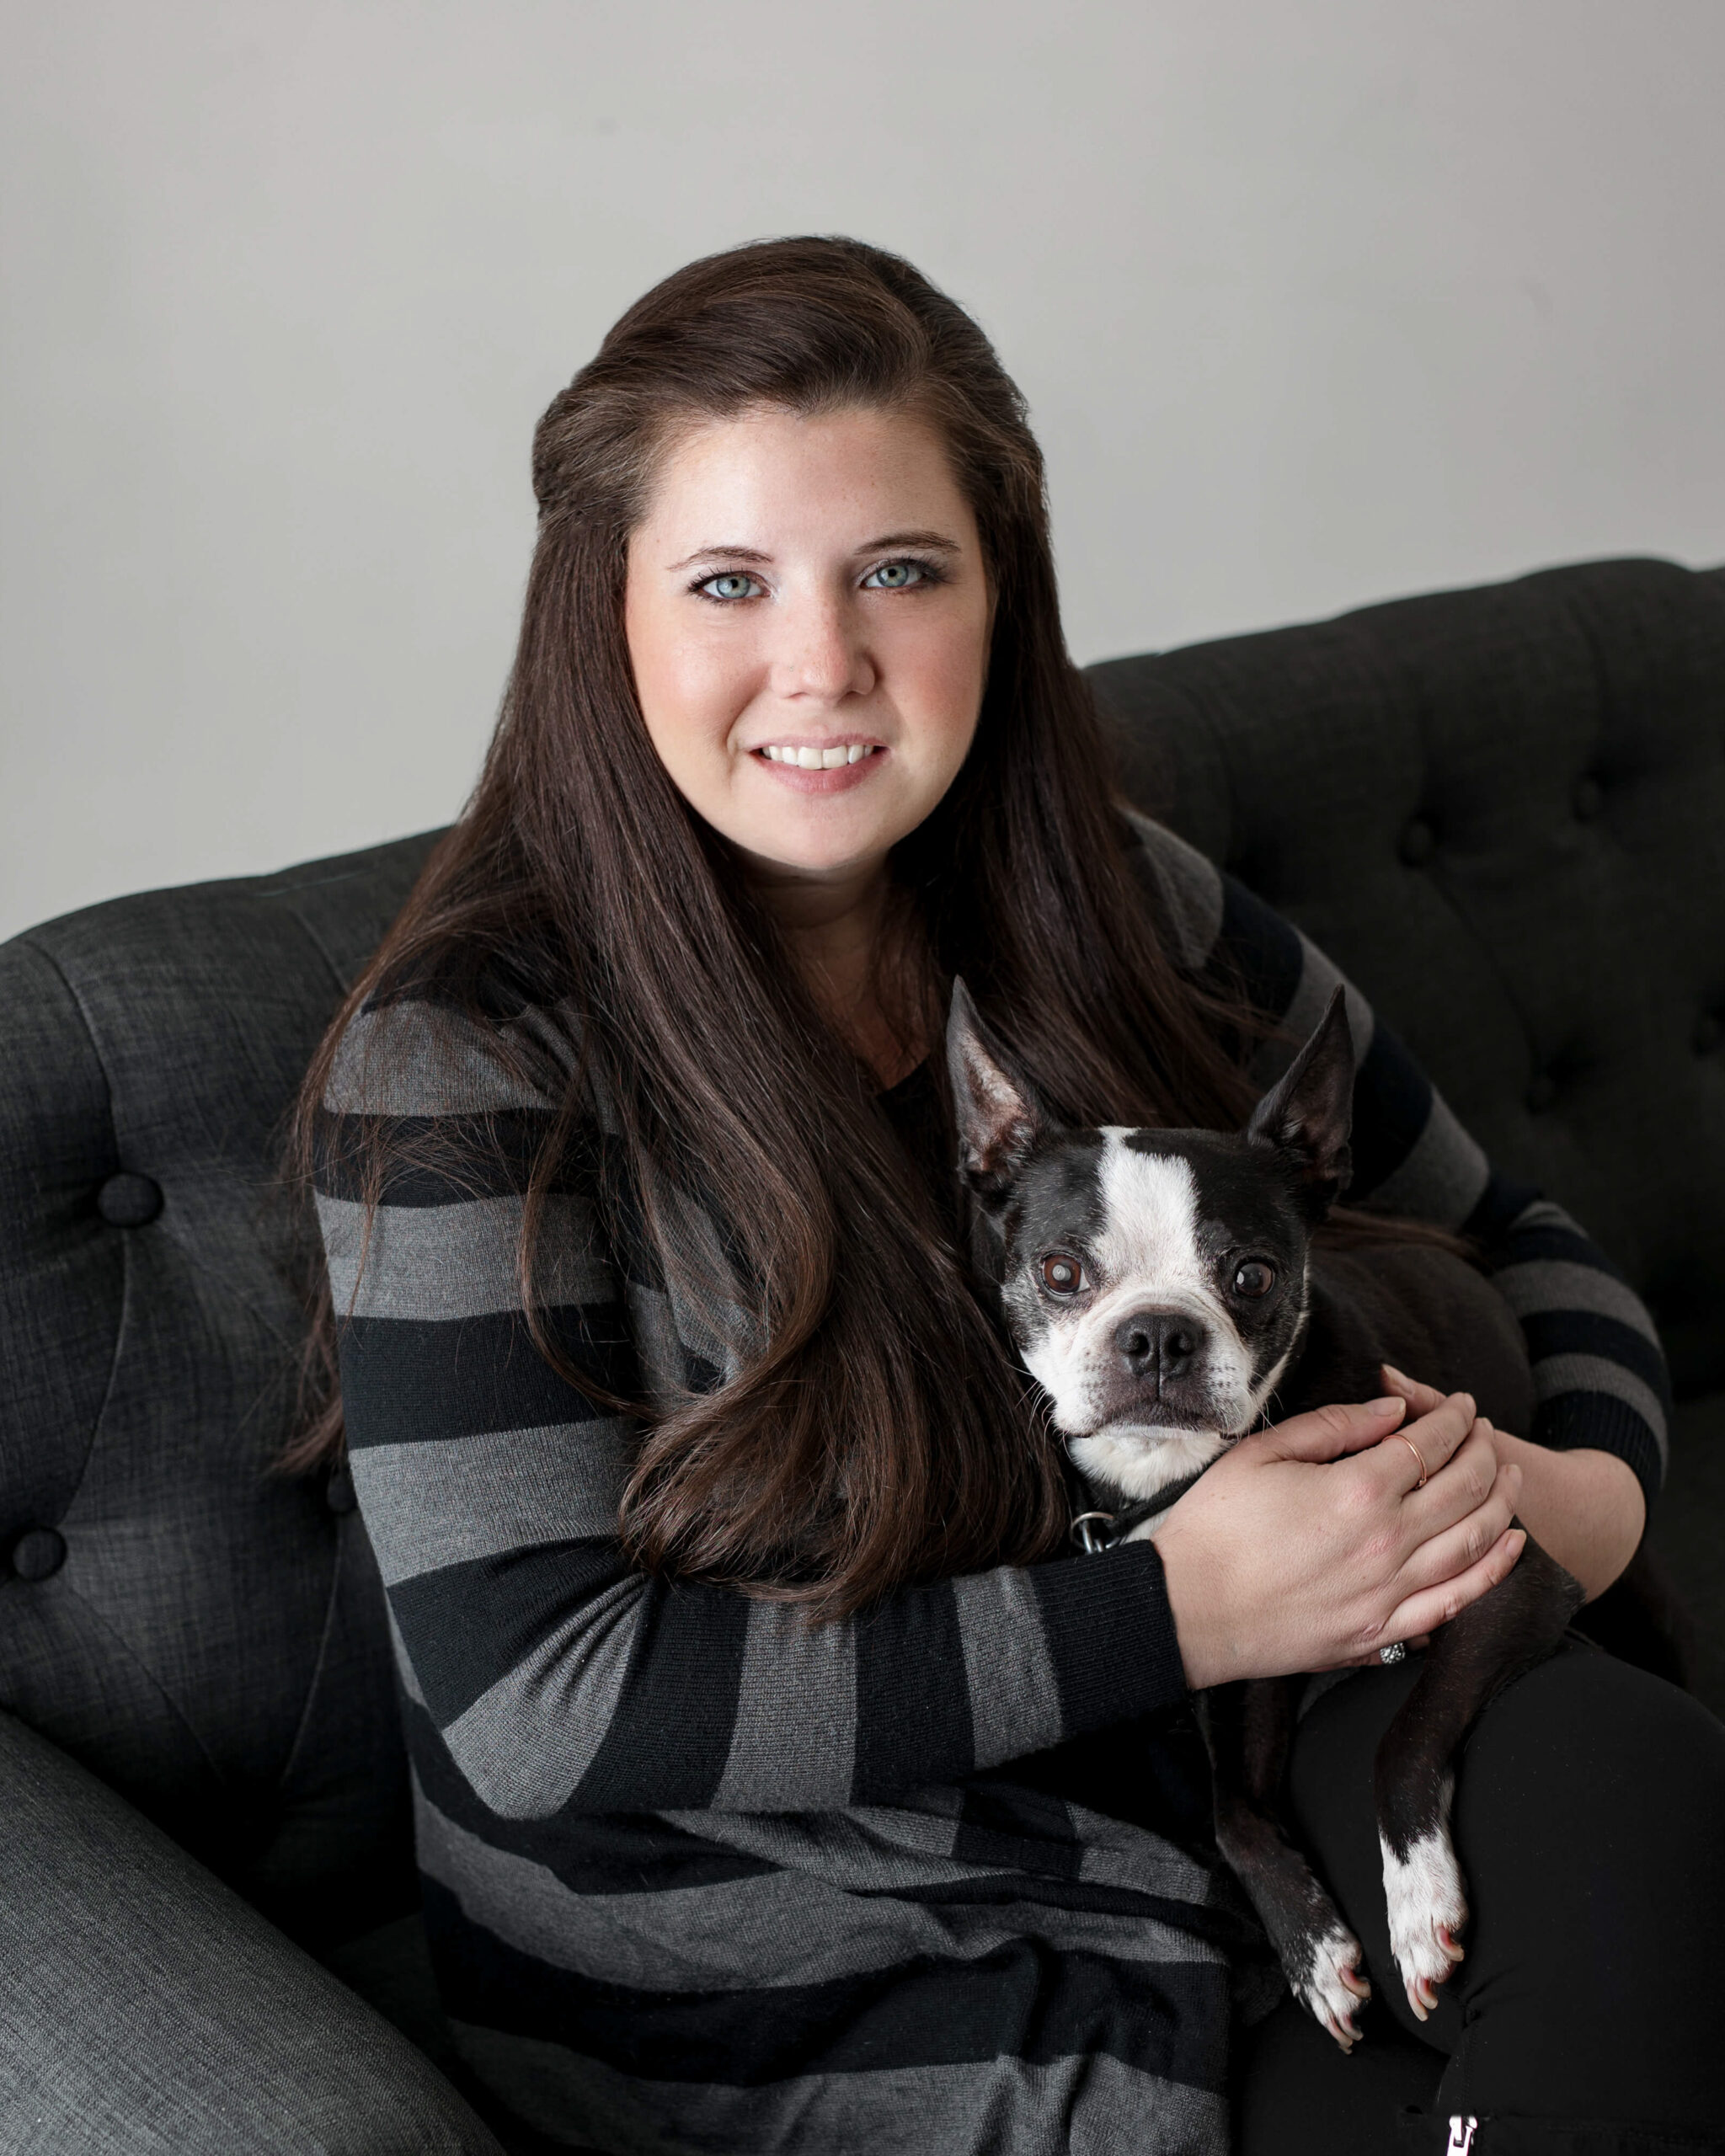 Newborn Photographer in Northern Virginia in her portrait photography studio holding her dog.